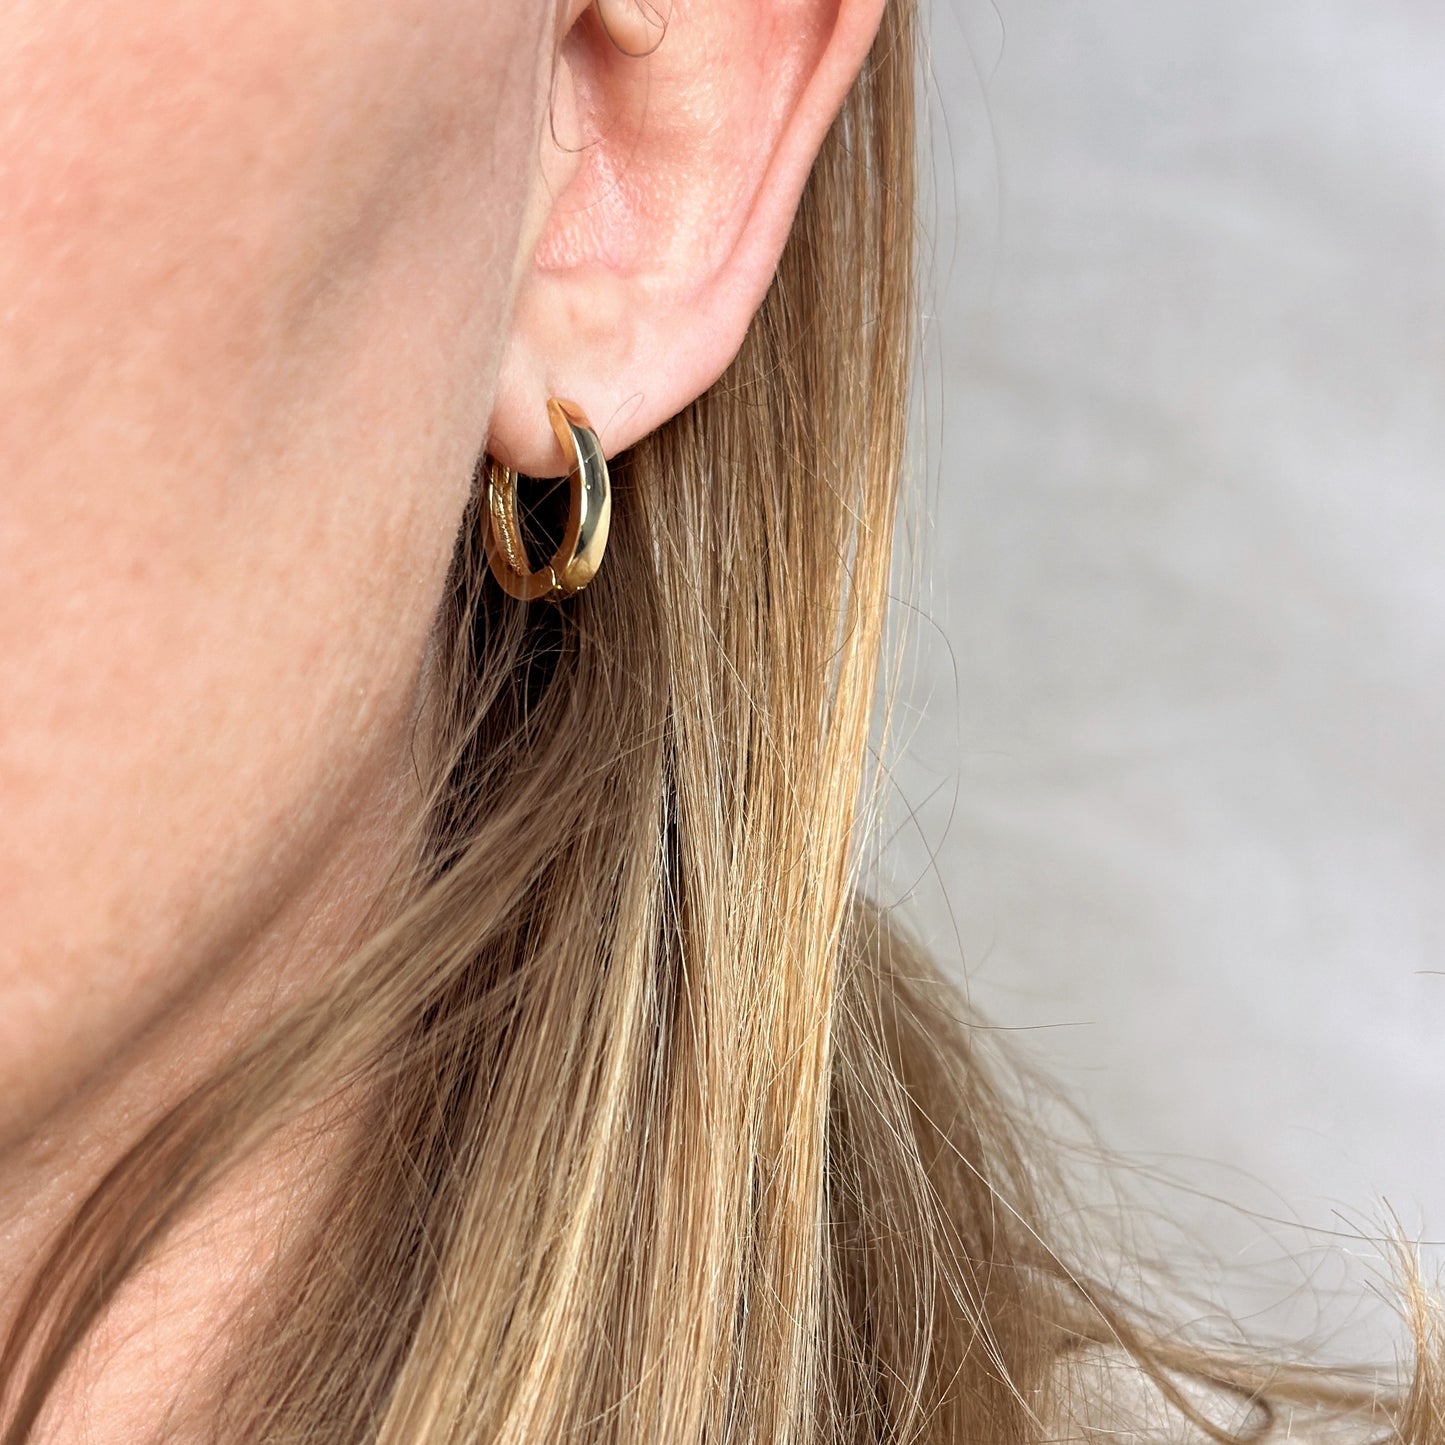 18k Gold Filled Slightly Oval Shape Polished Hoop Earrings